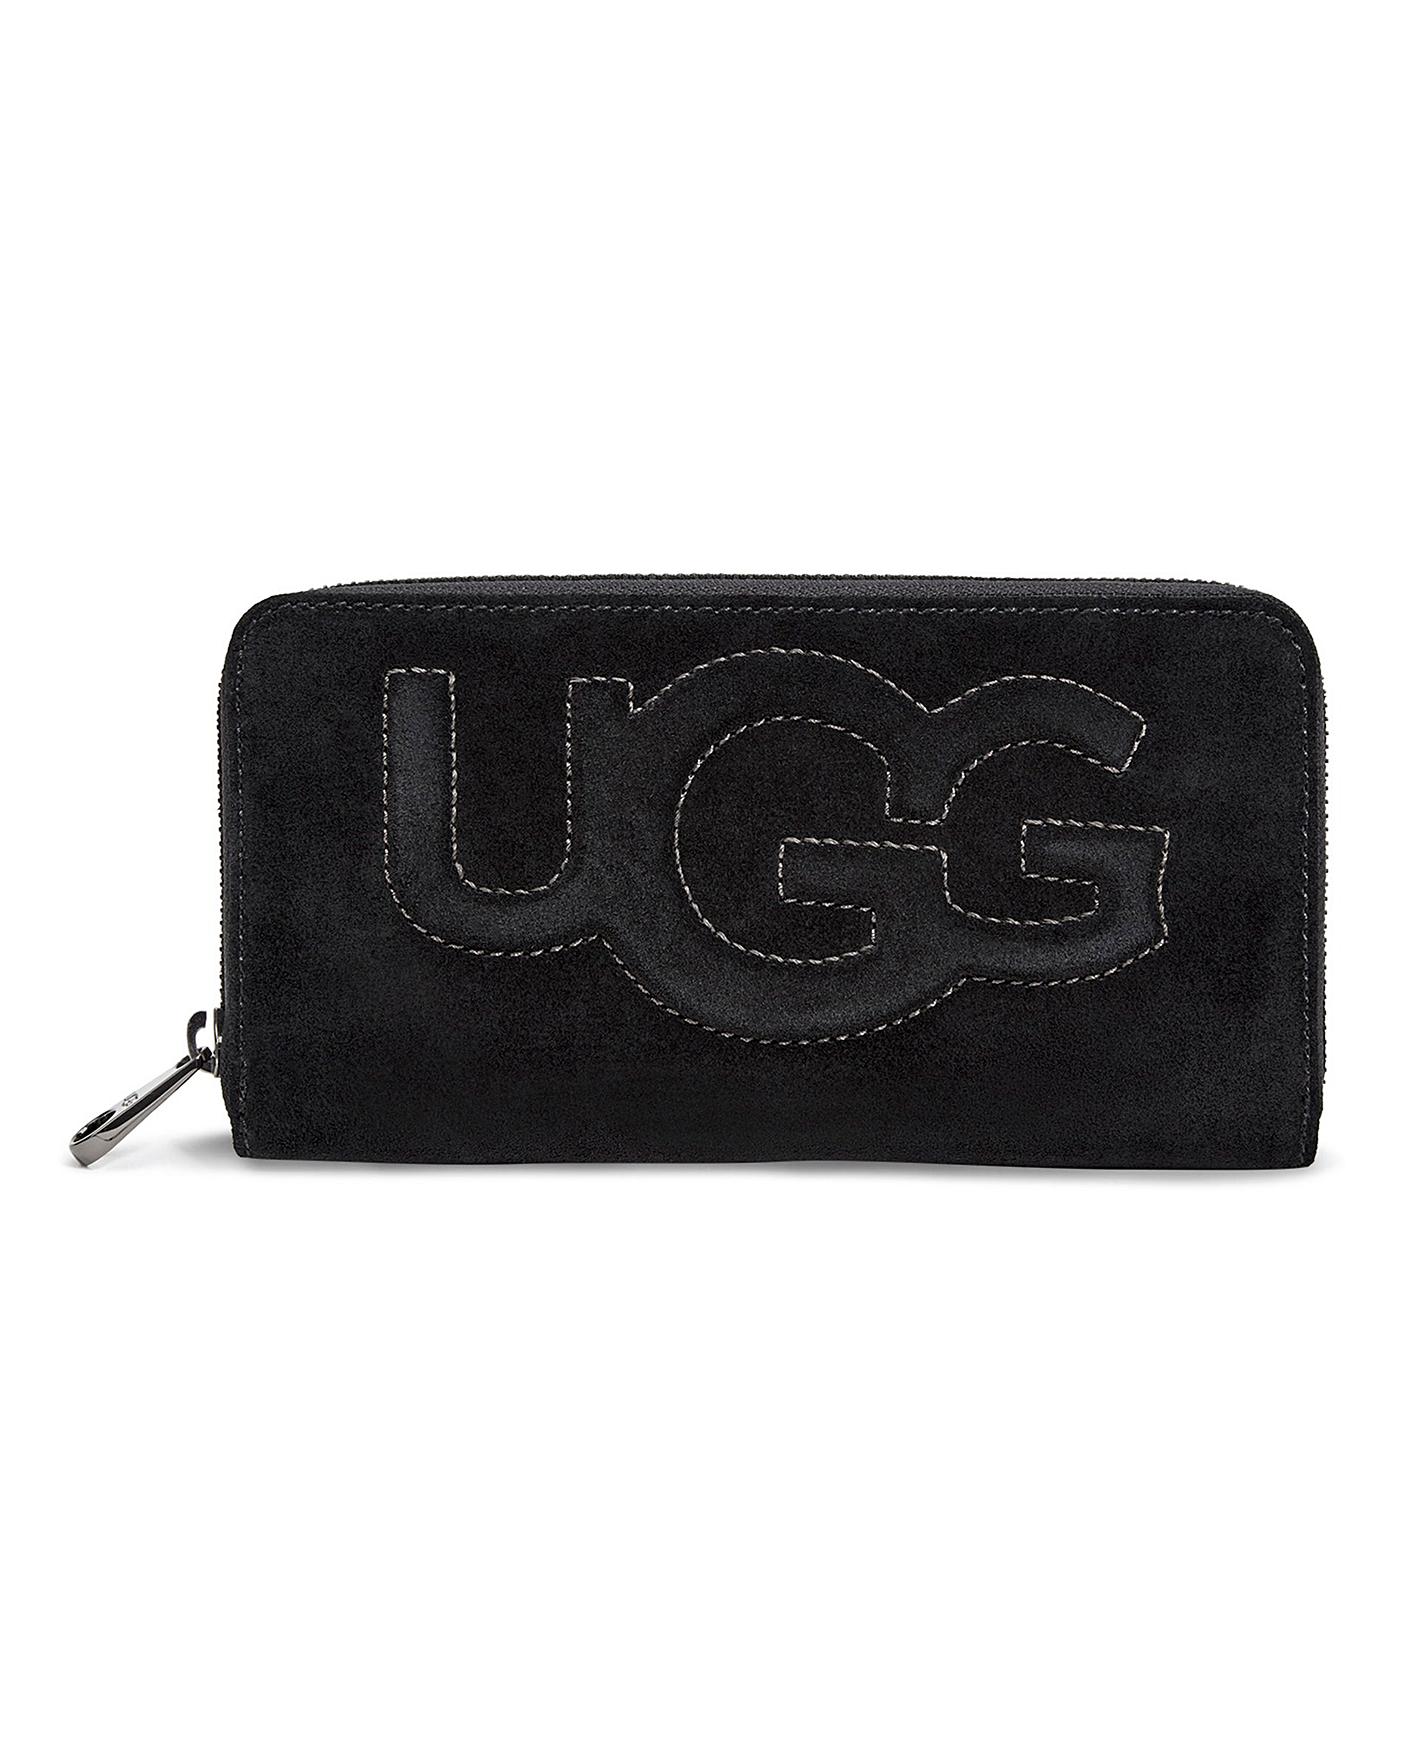 ugg leather wallet